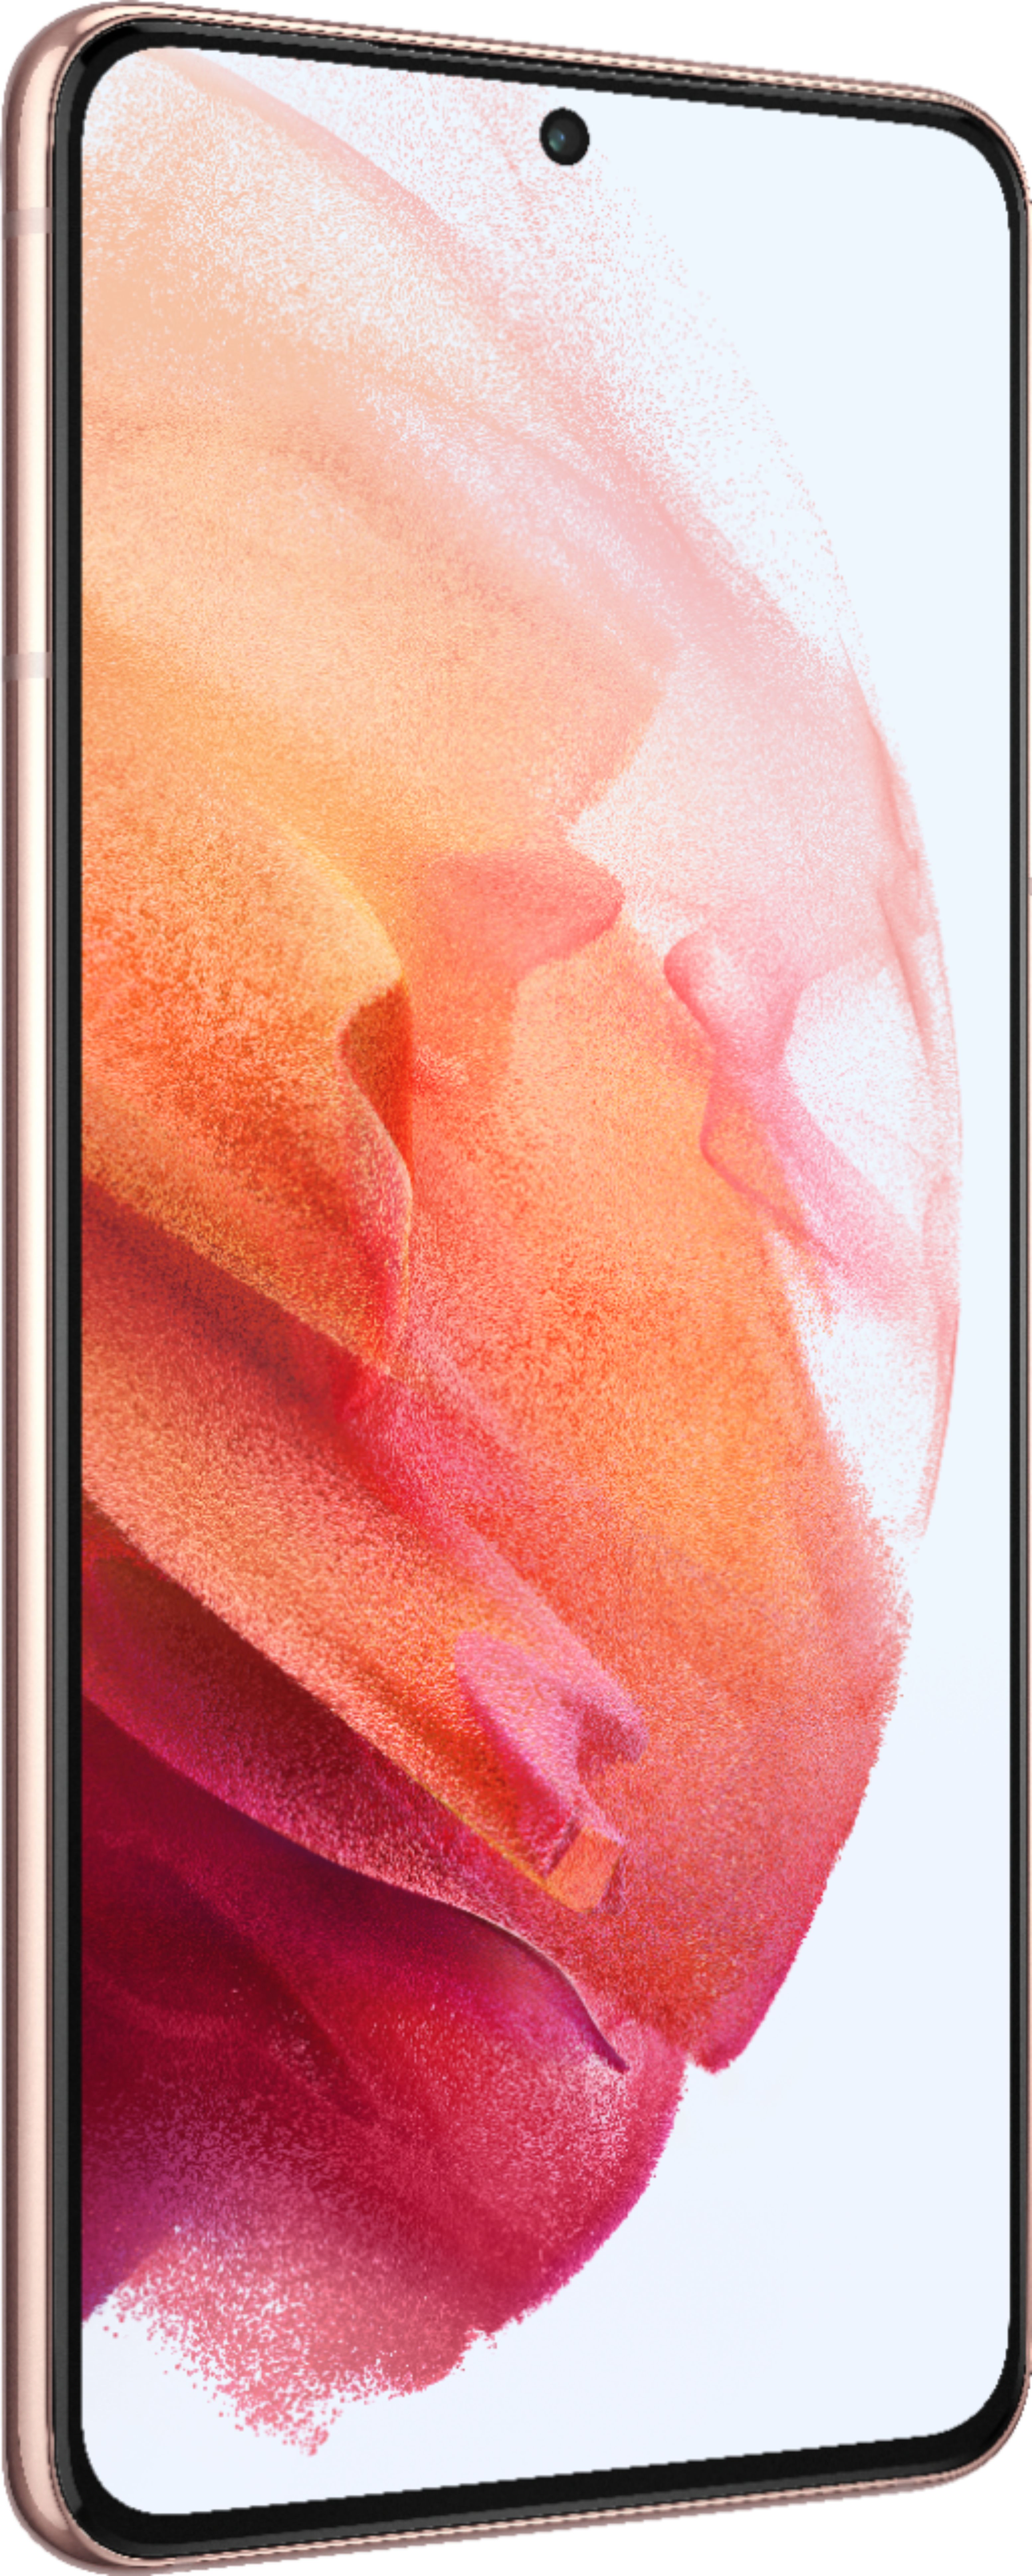 Samsung Galaxy S21 5G G991B 256GB Dual Sim GSM Unlocked Android Smartphone (International Variant/US Compatible LTE) - Phantom Pink - image 2 of 9